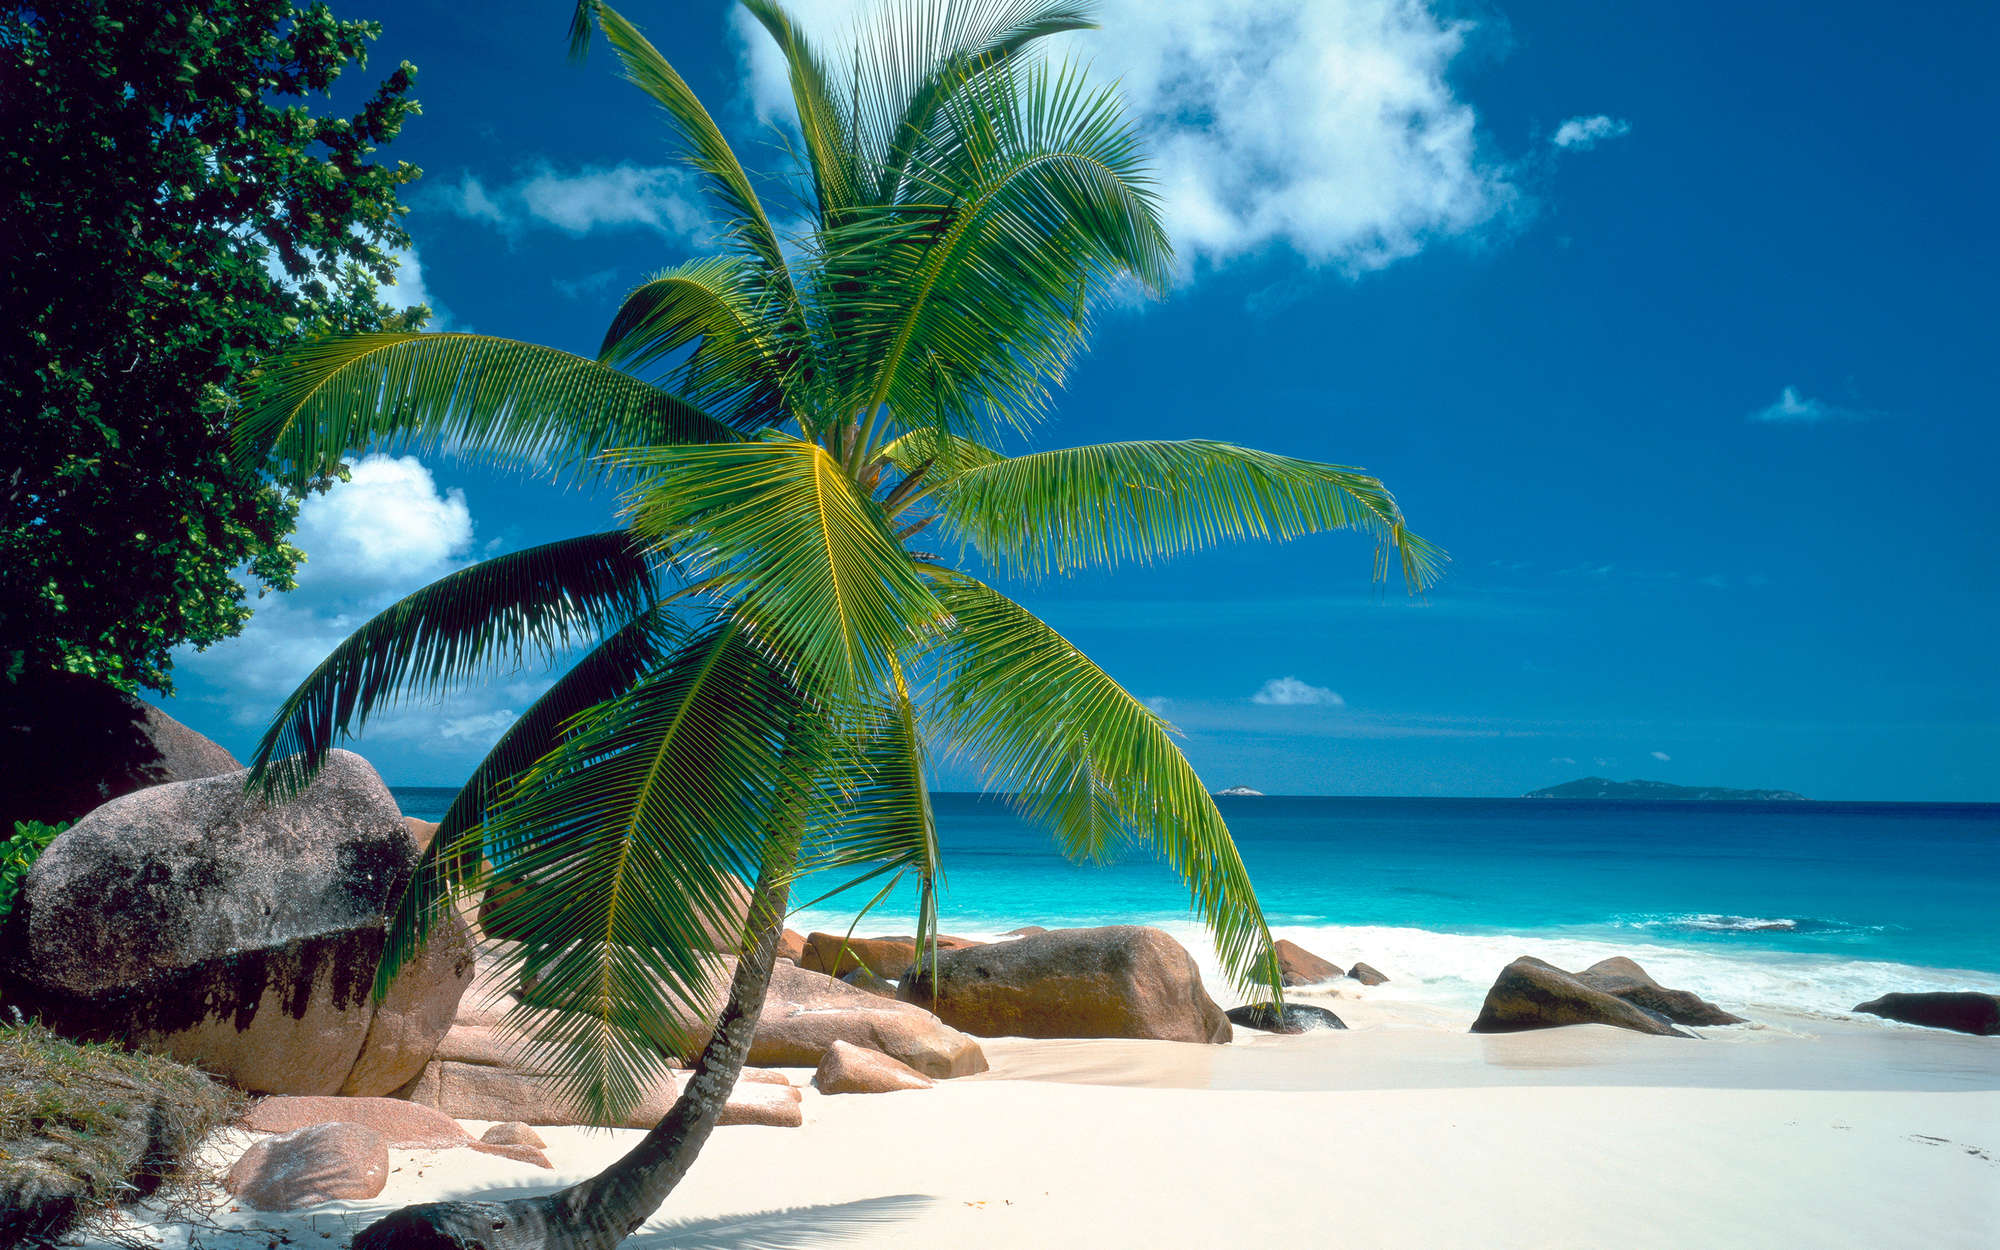             Strand met palmboom behang - Premium glad vlies
        